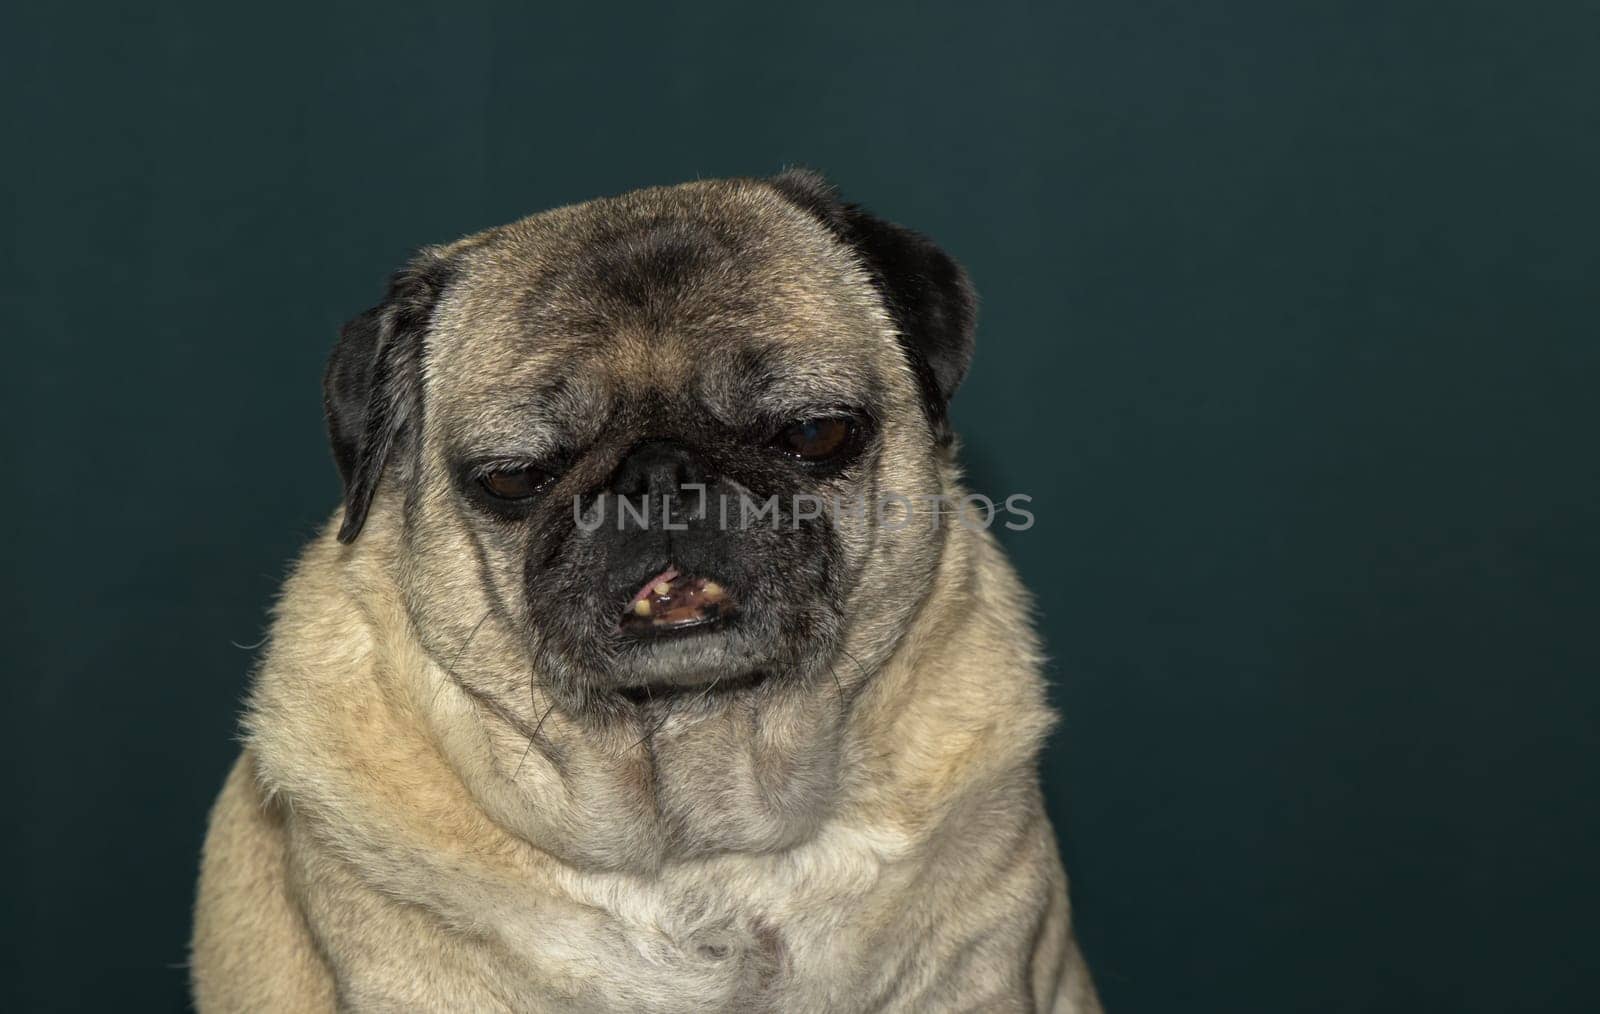 old pug portrait tna dark green background 7 by Mixa74